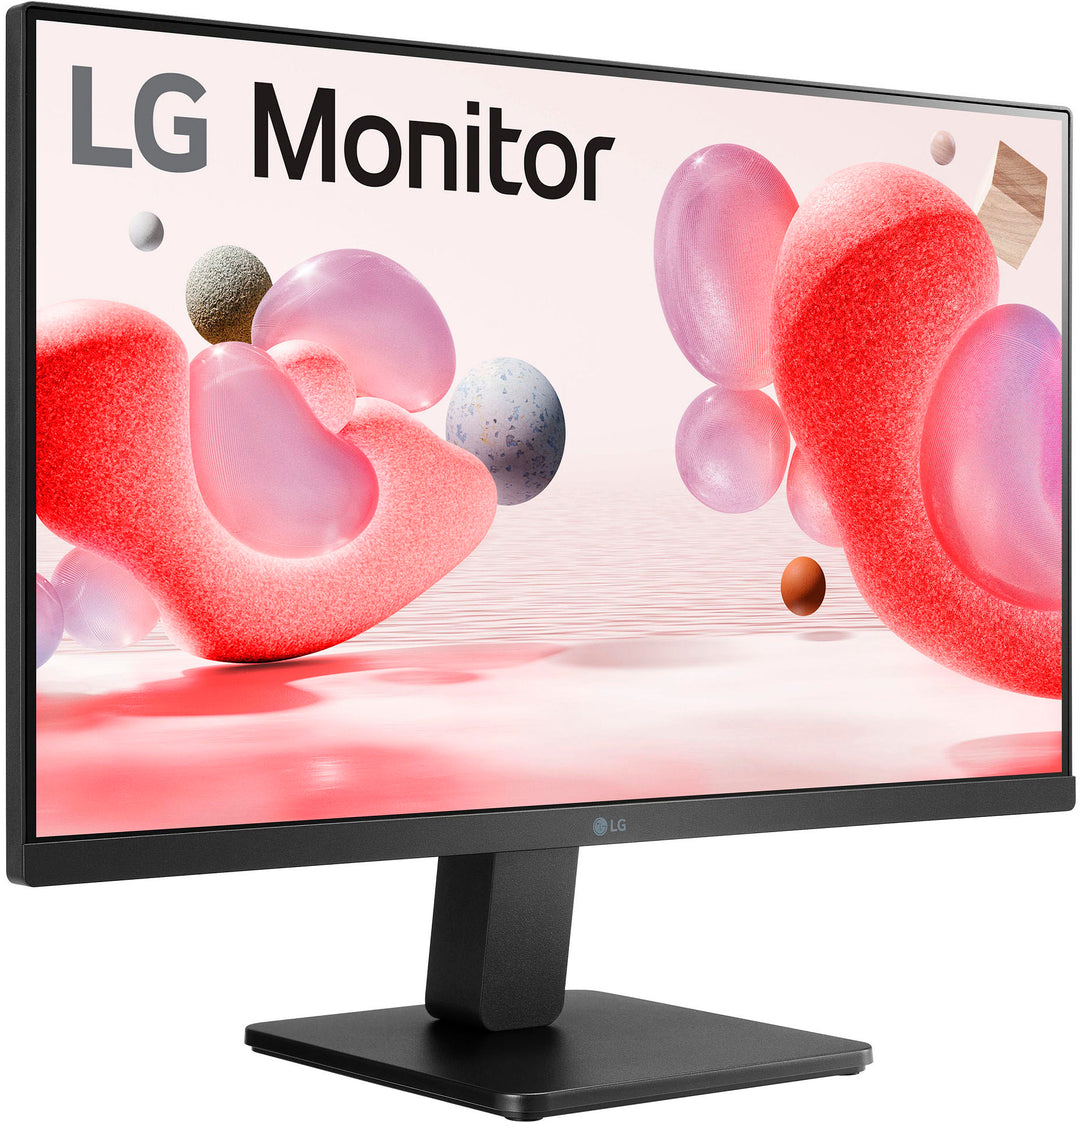 LG - 24" IPS FHD FreeSync Monitor (HDMI) - Black_5